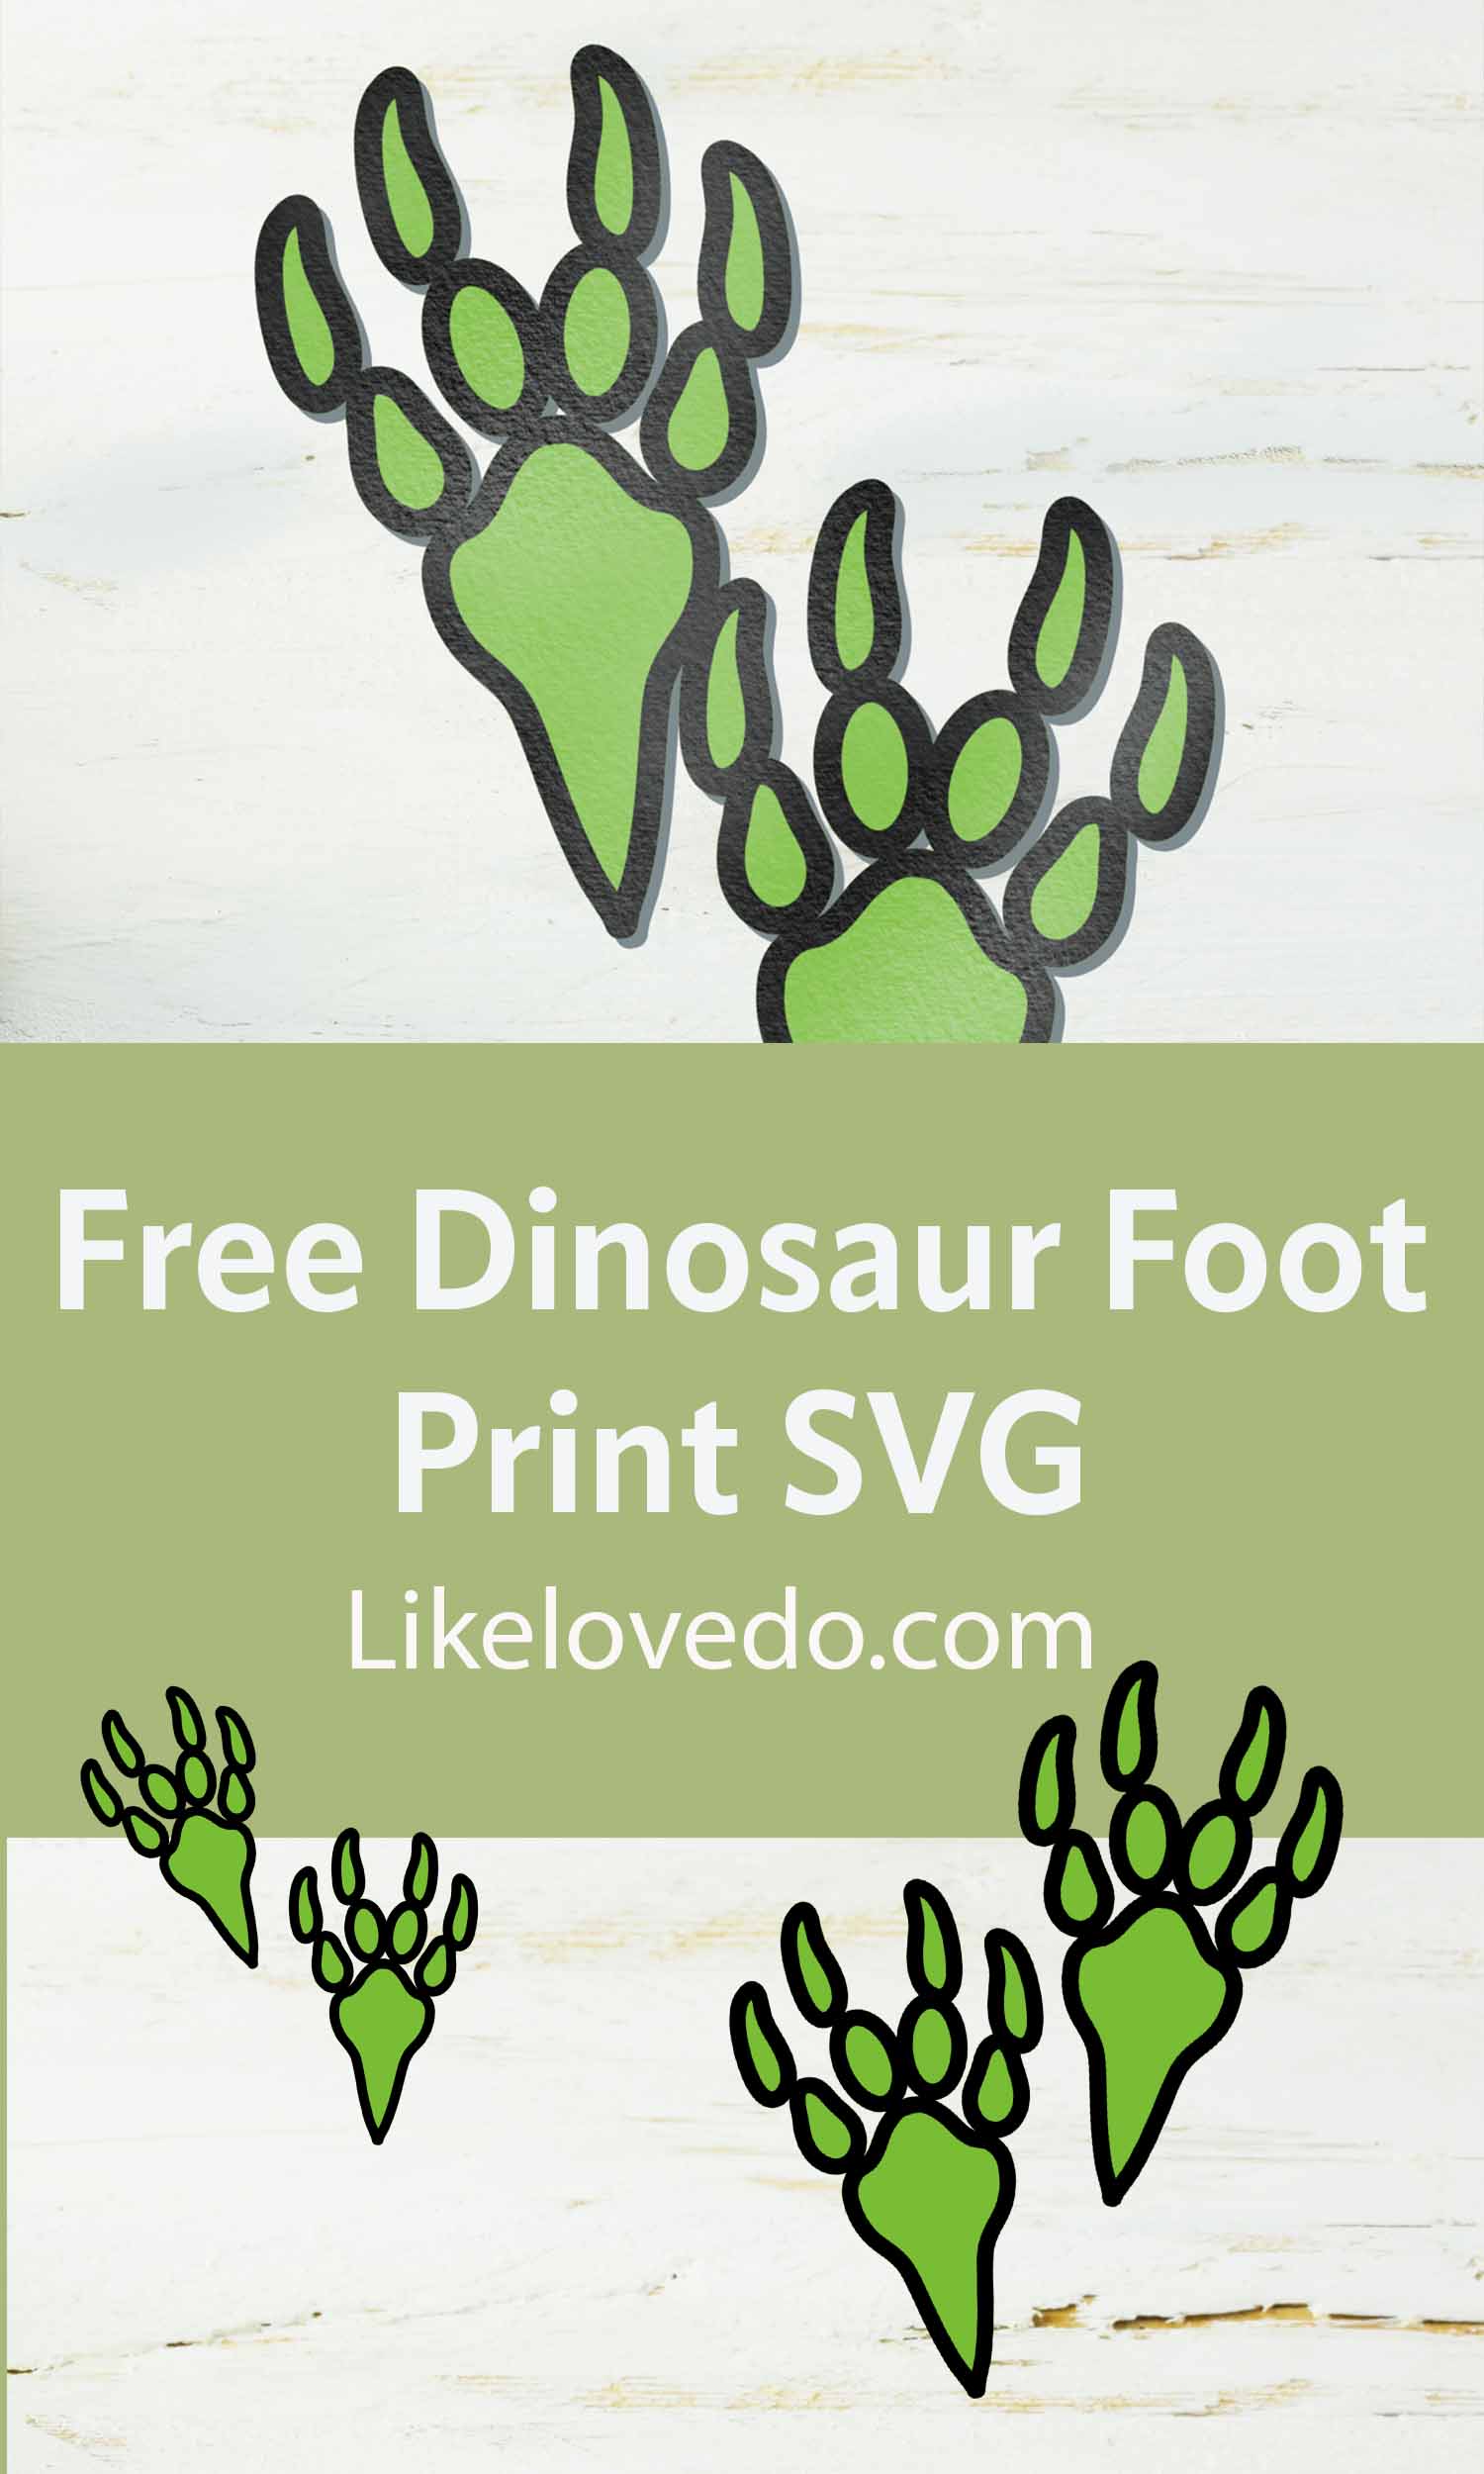 Layered Dinosaur Foot Print SVG